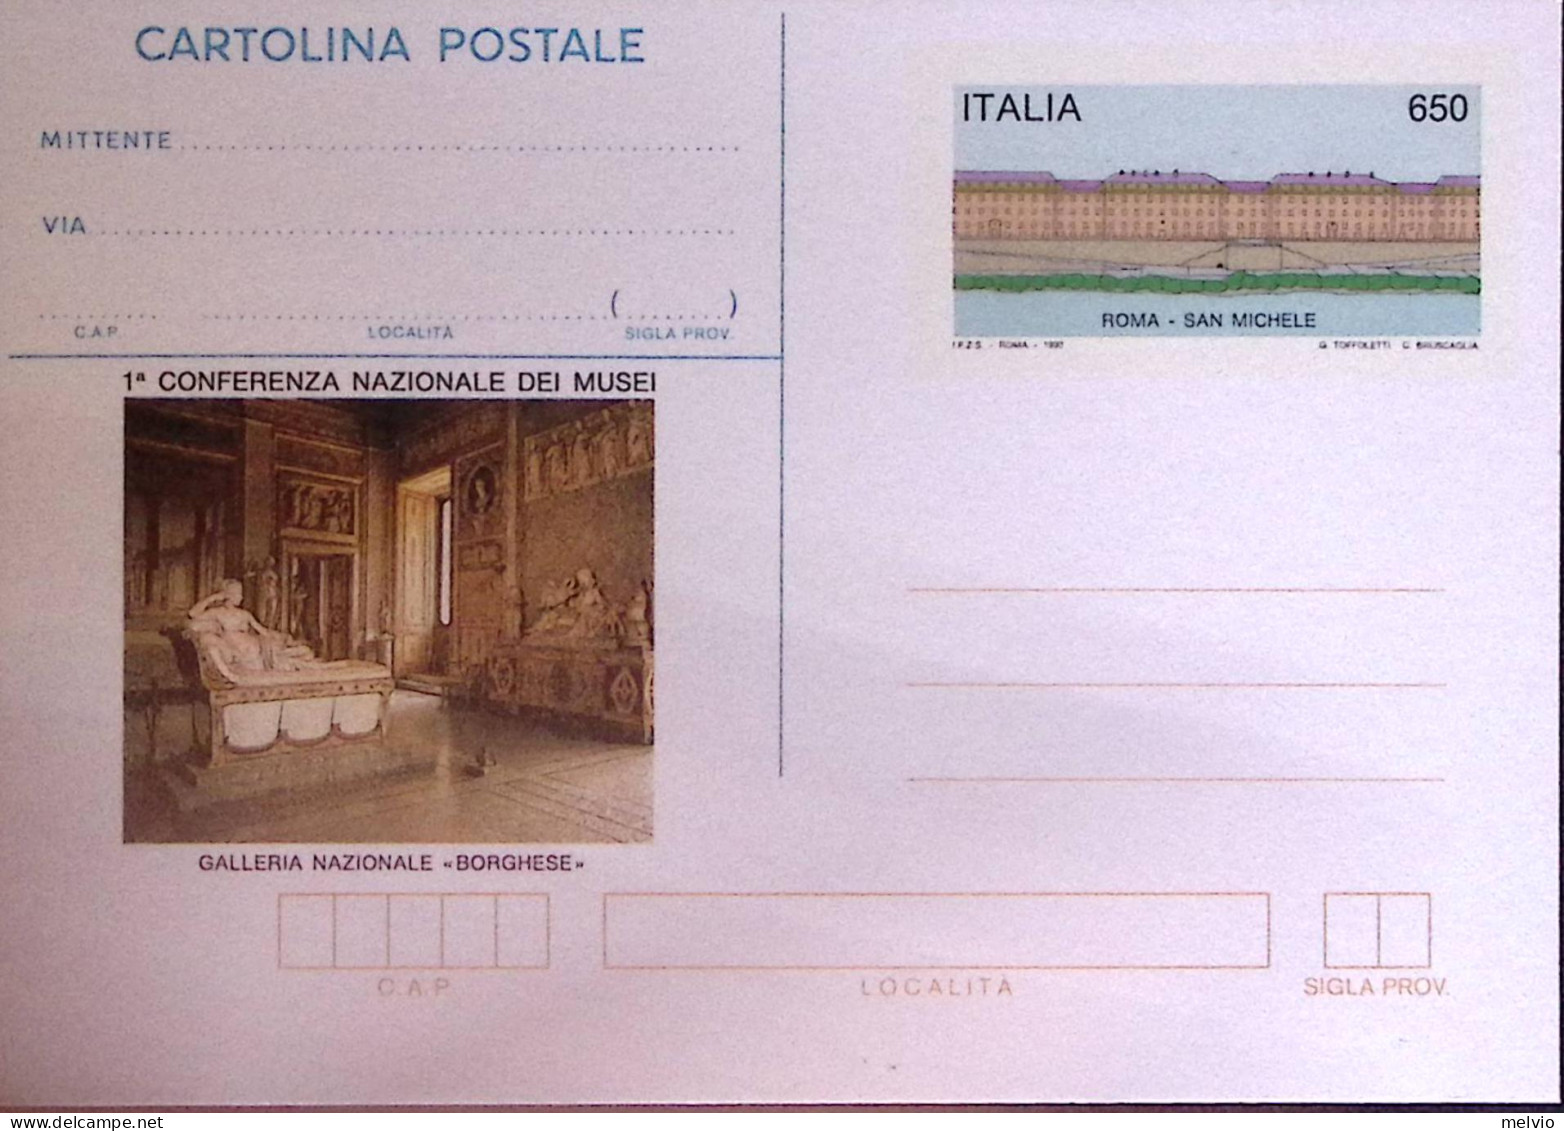 1990-Cartolina Postale Lire 650 Conferenza Musei Nuova - Stamped Stationery